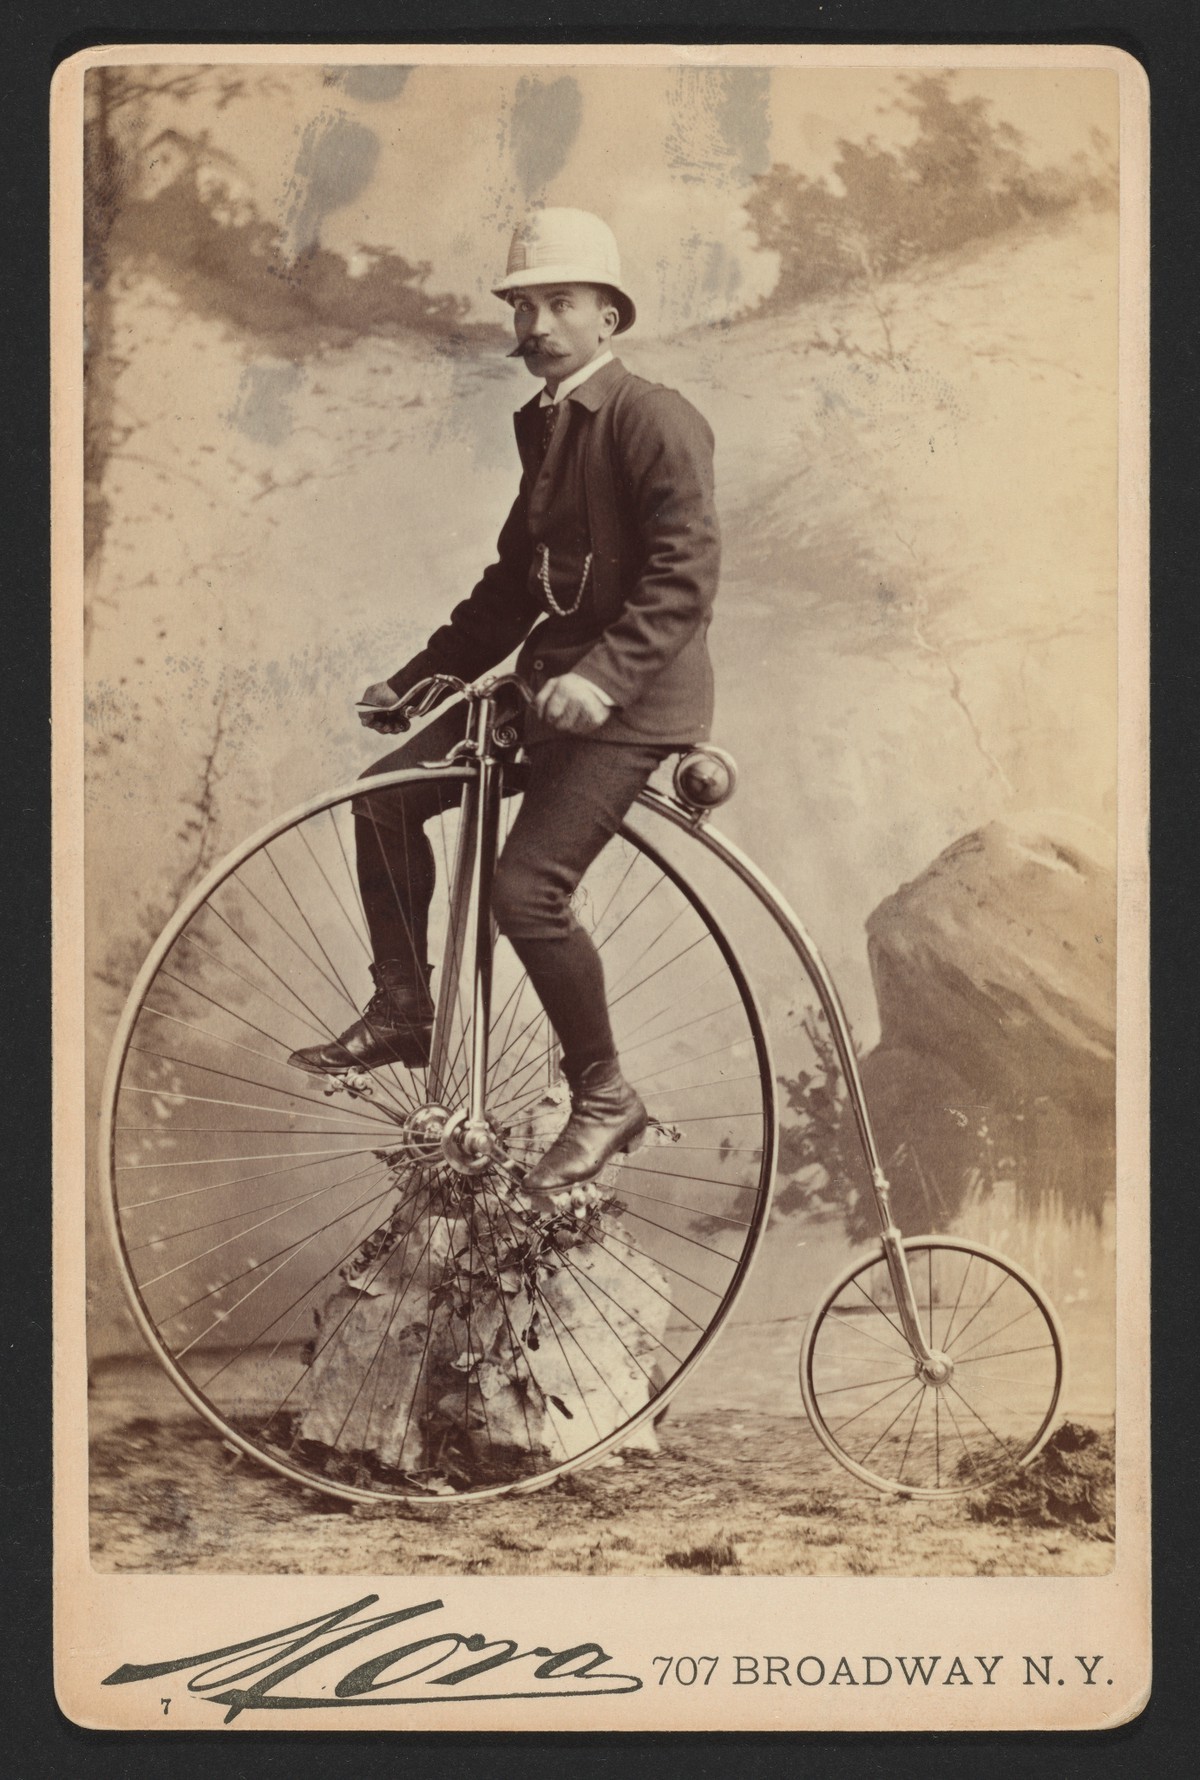 thomas stevens bicycle